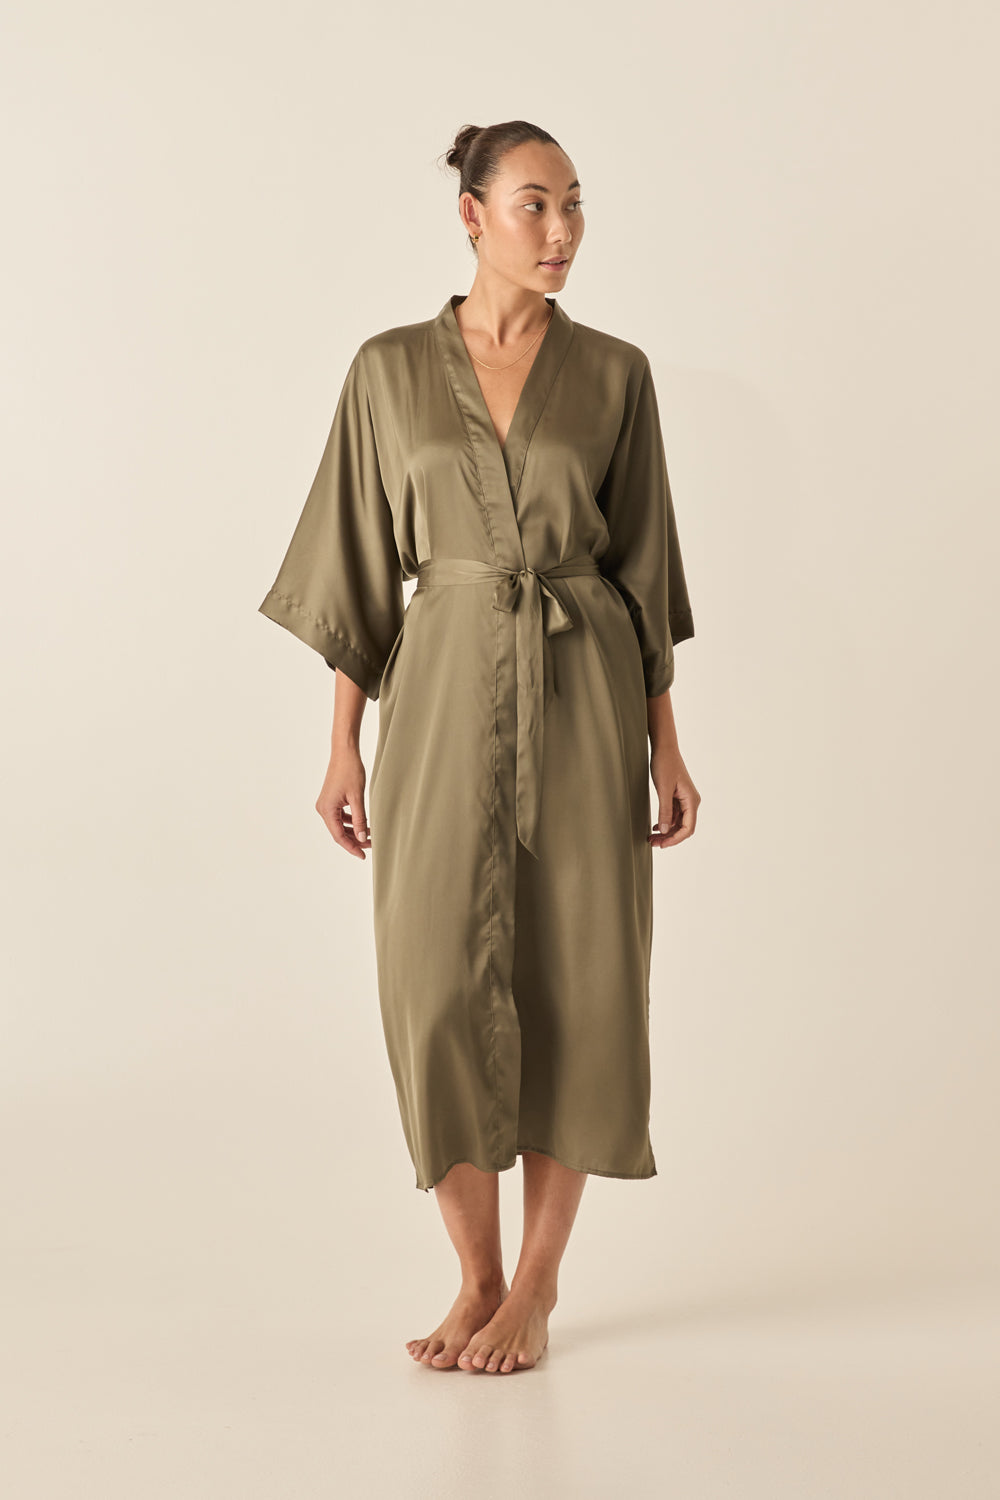 Florence Olive Satin Robe